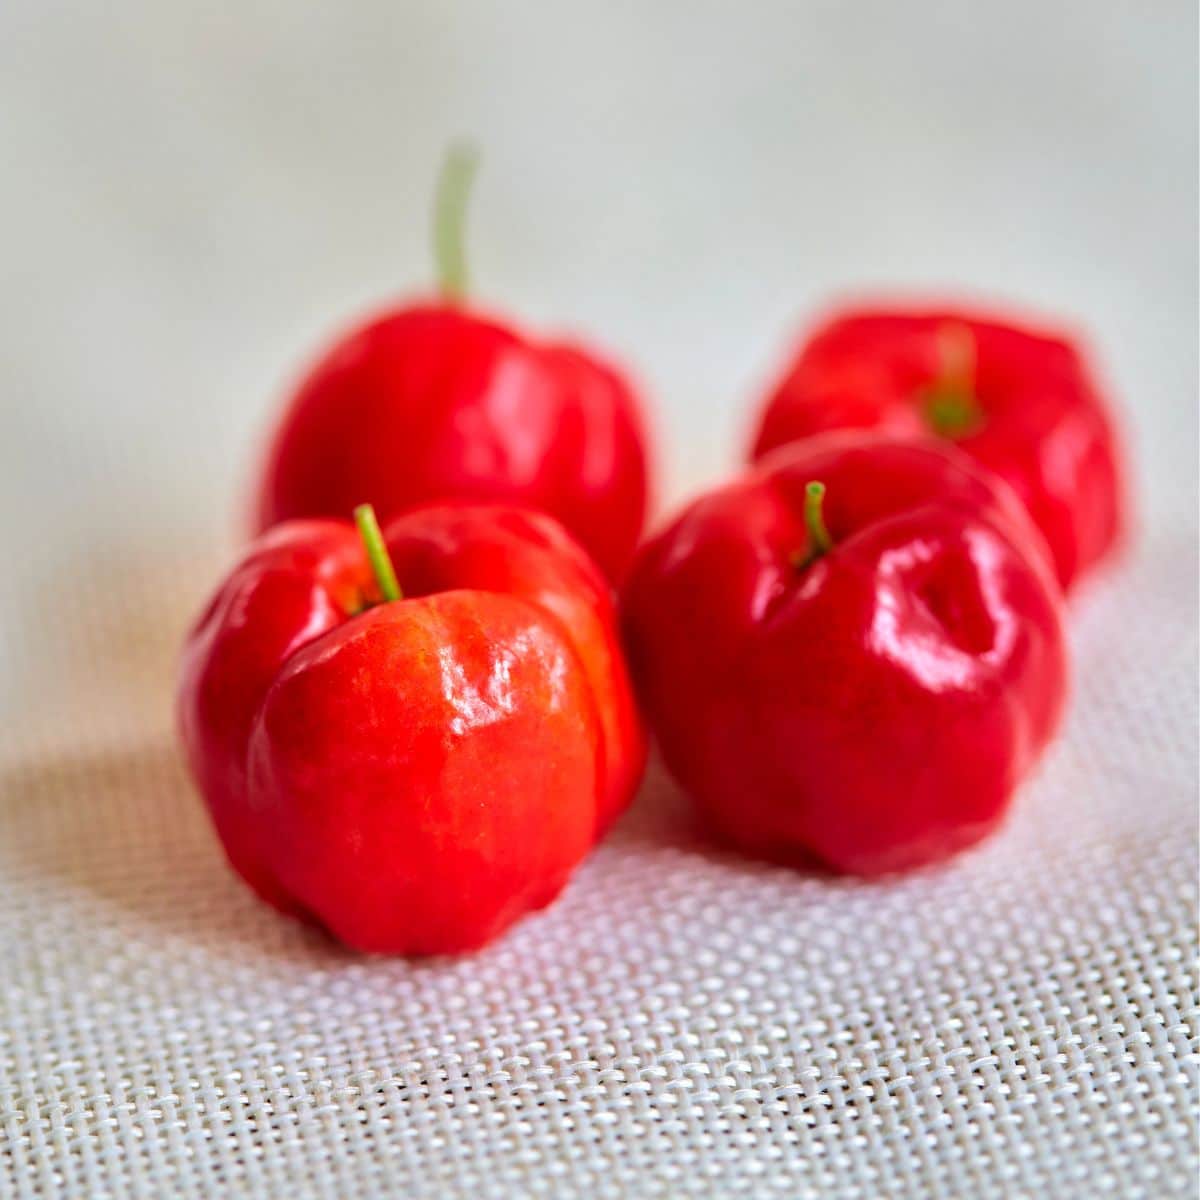 Spanish cherries on a table cloth.